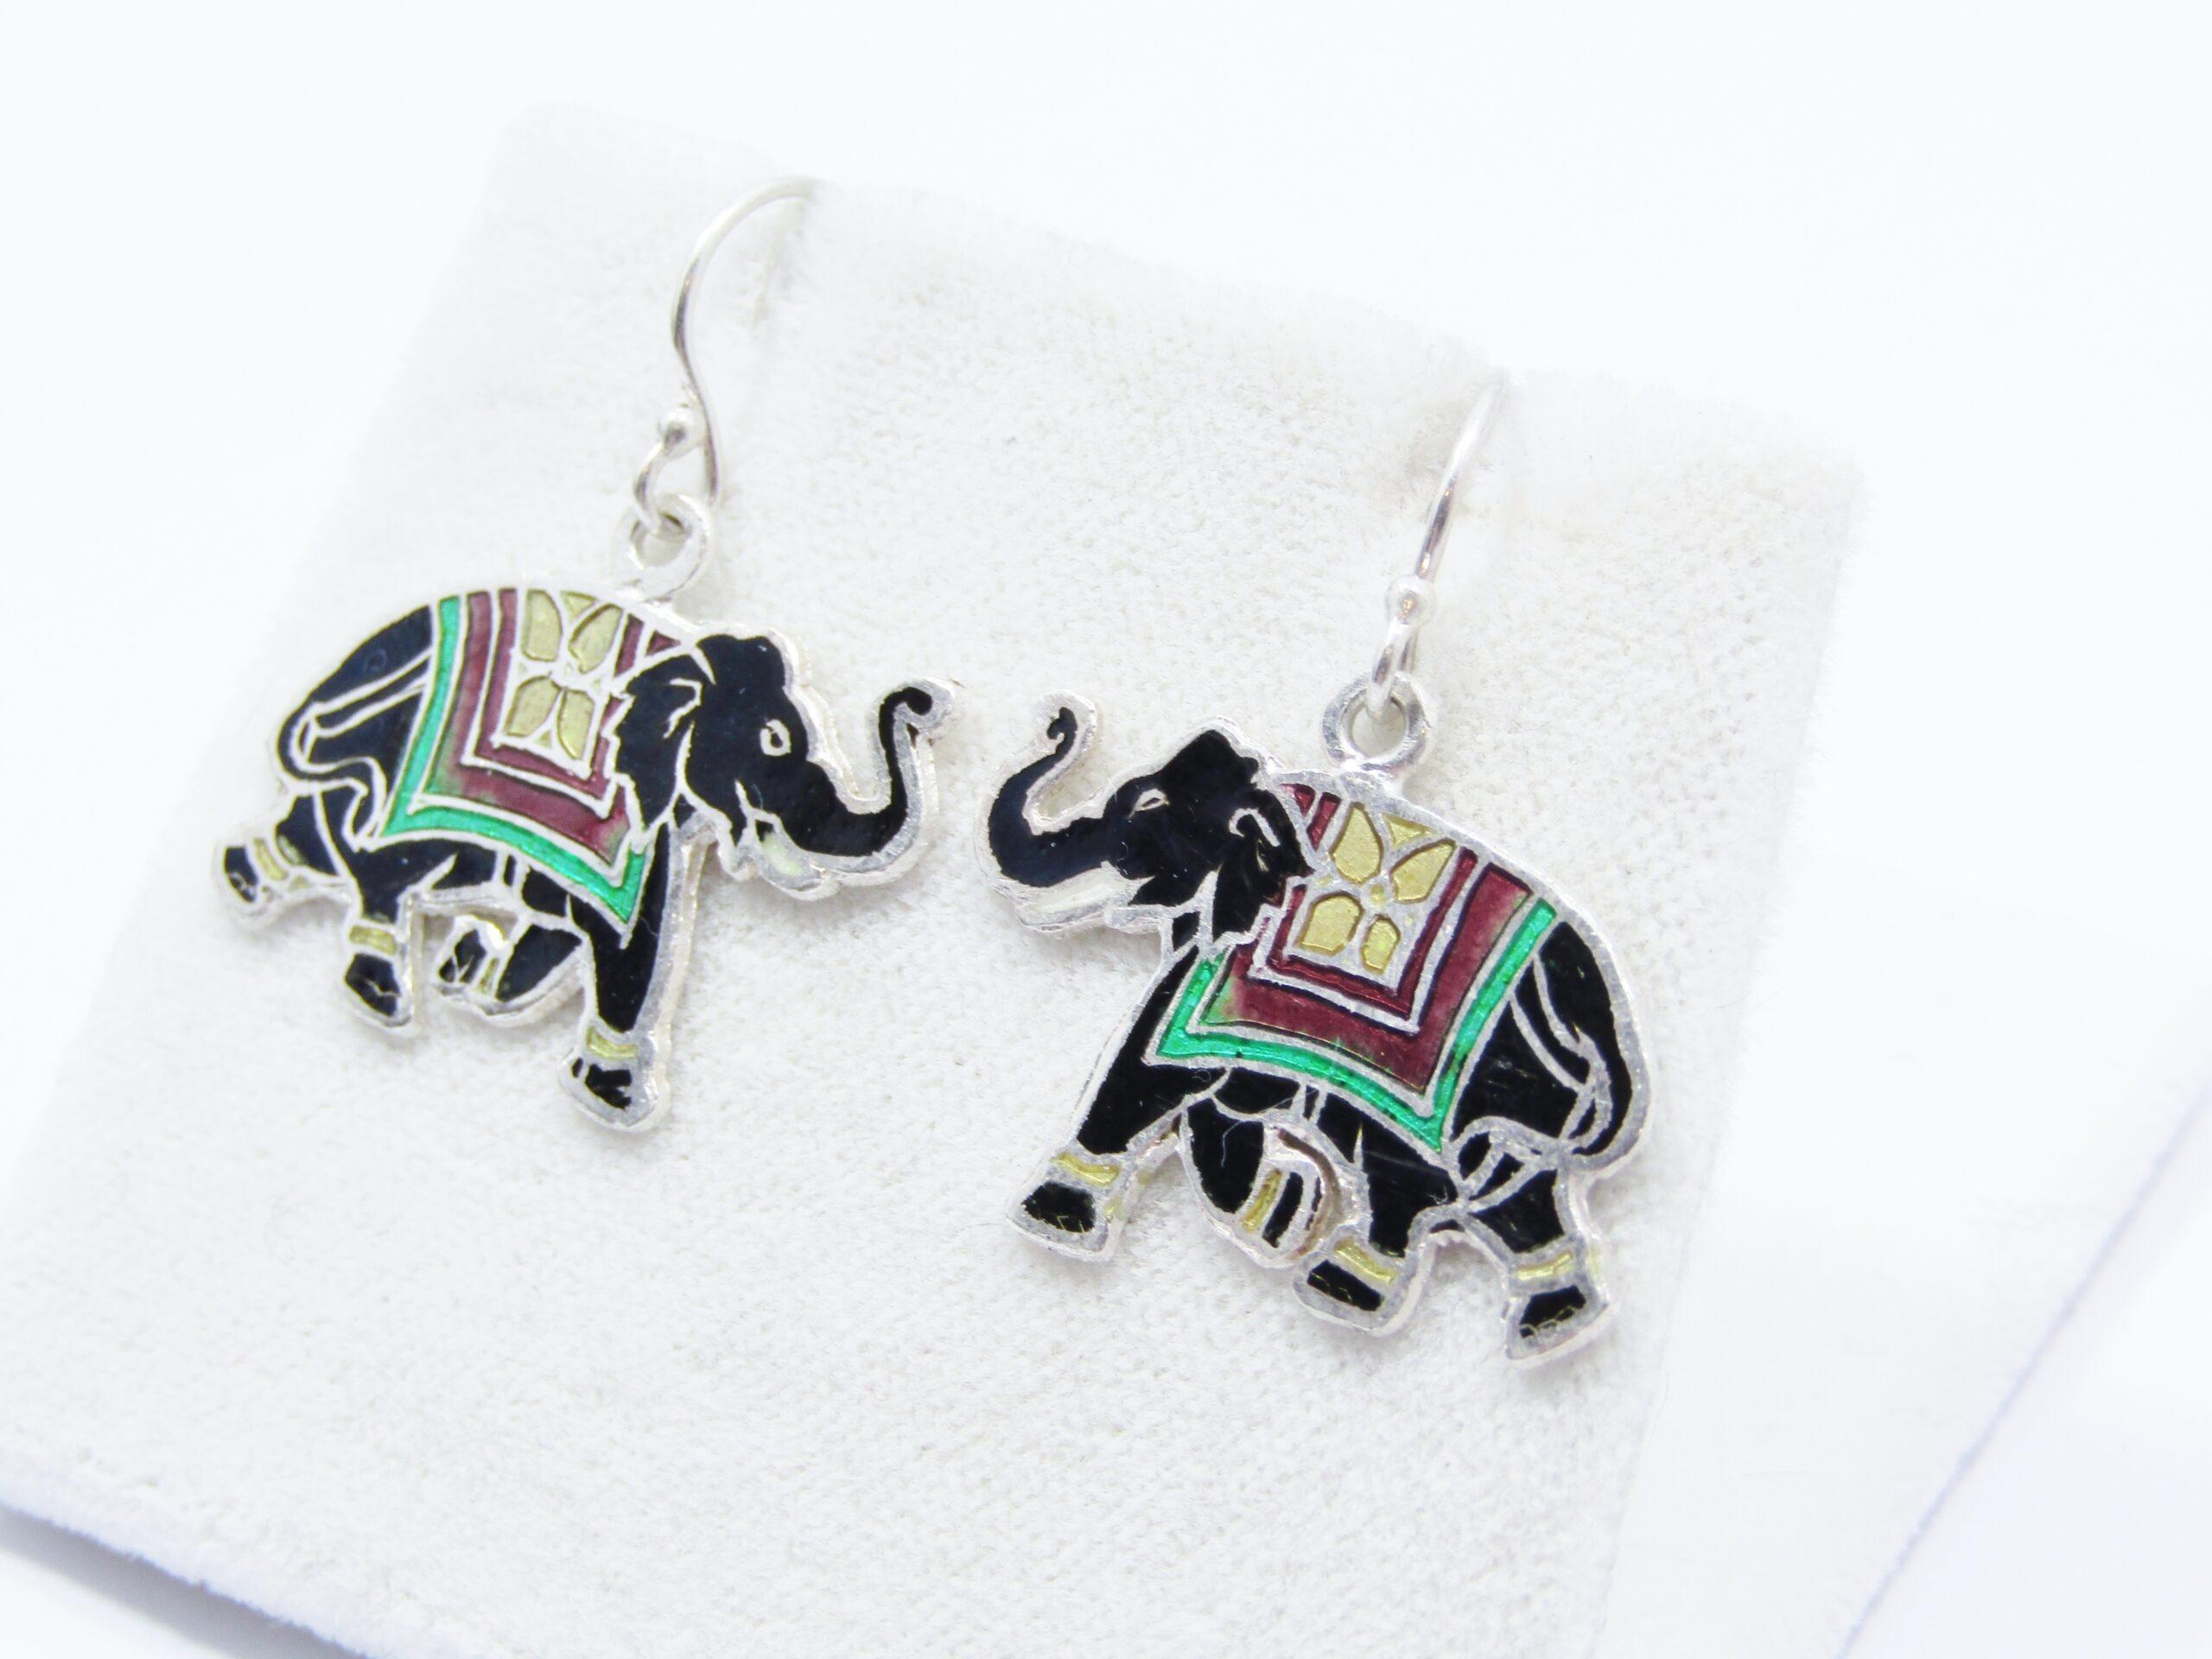 A Lovely Pair of Enameled Elephant Earrings in Sterling Silver